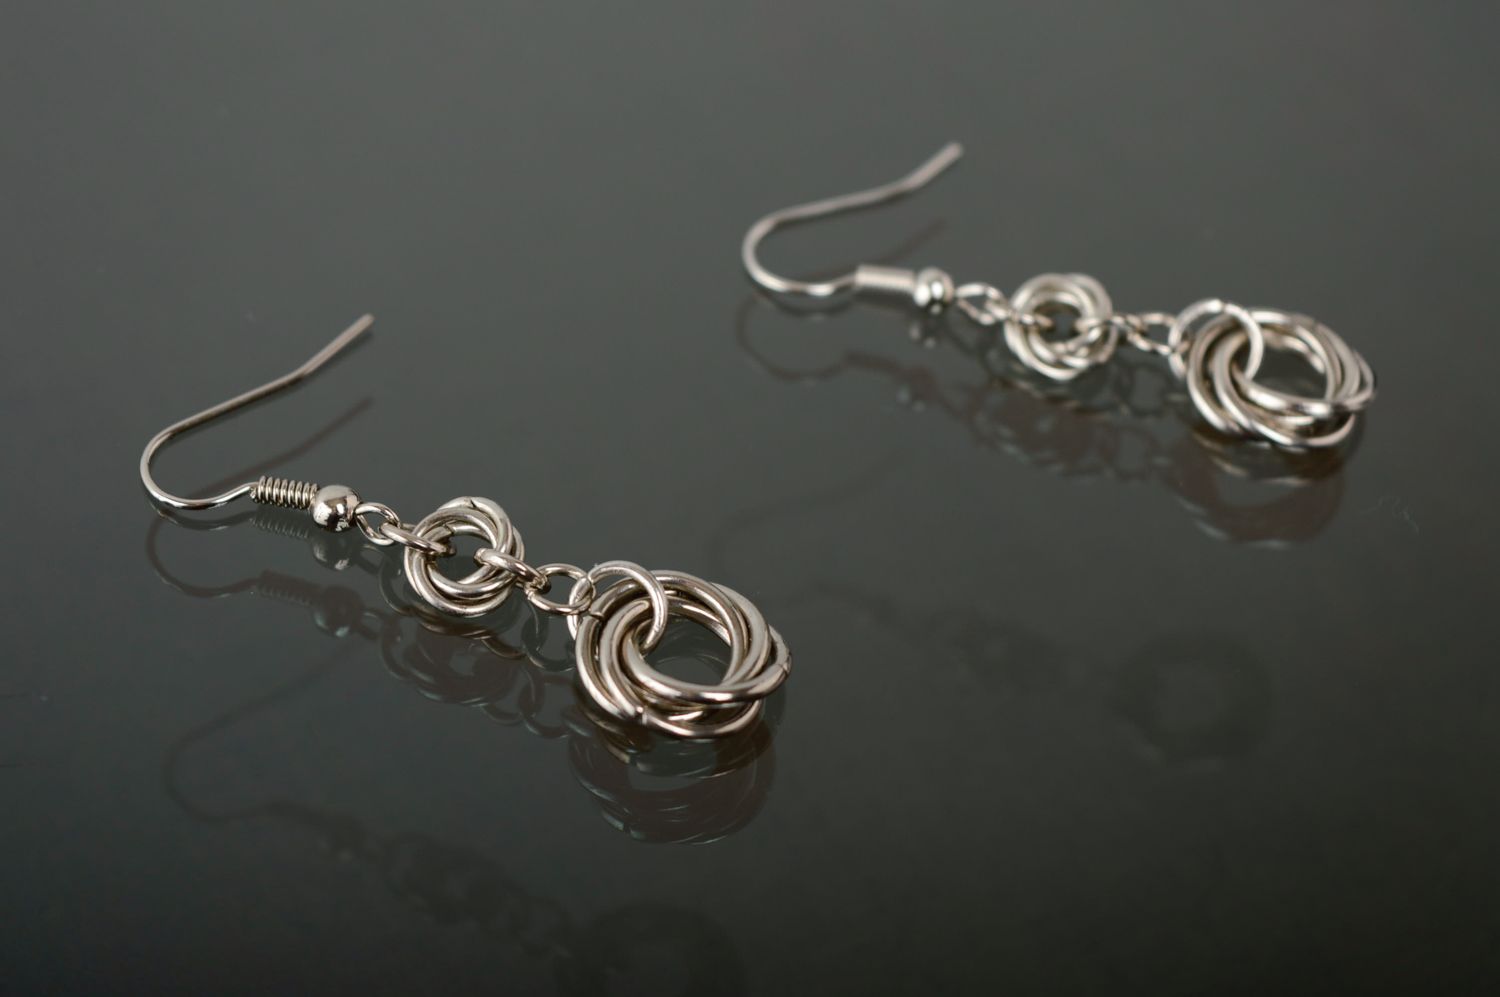 Handmade metal earrings created using chain armor weaving technique photo 2